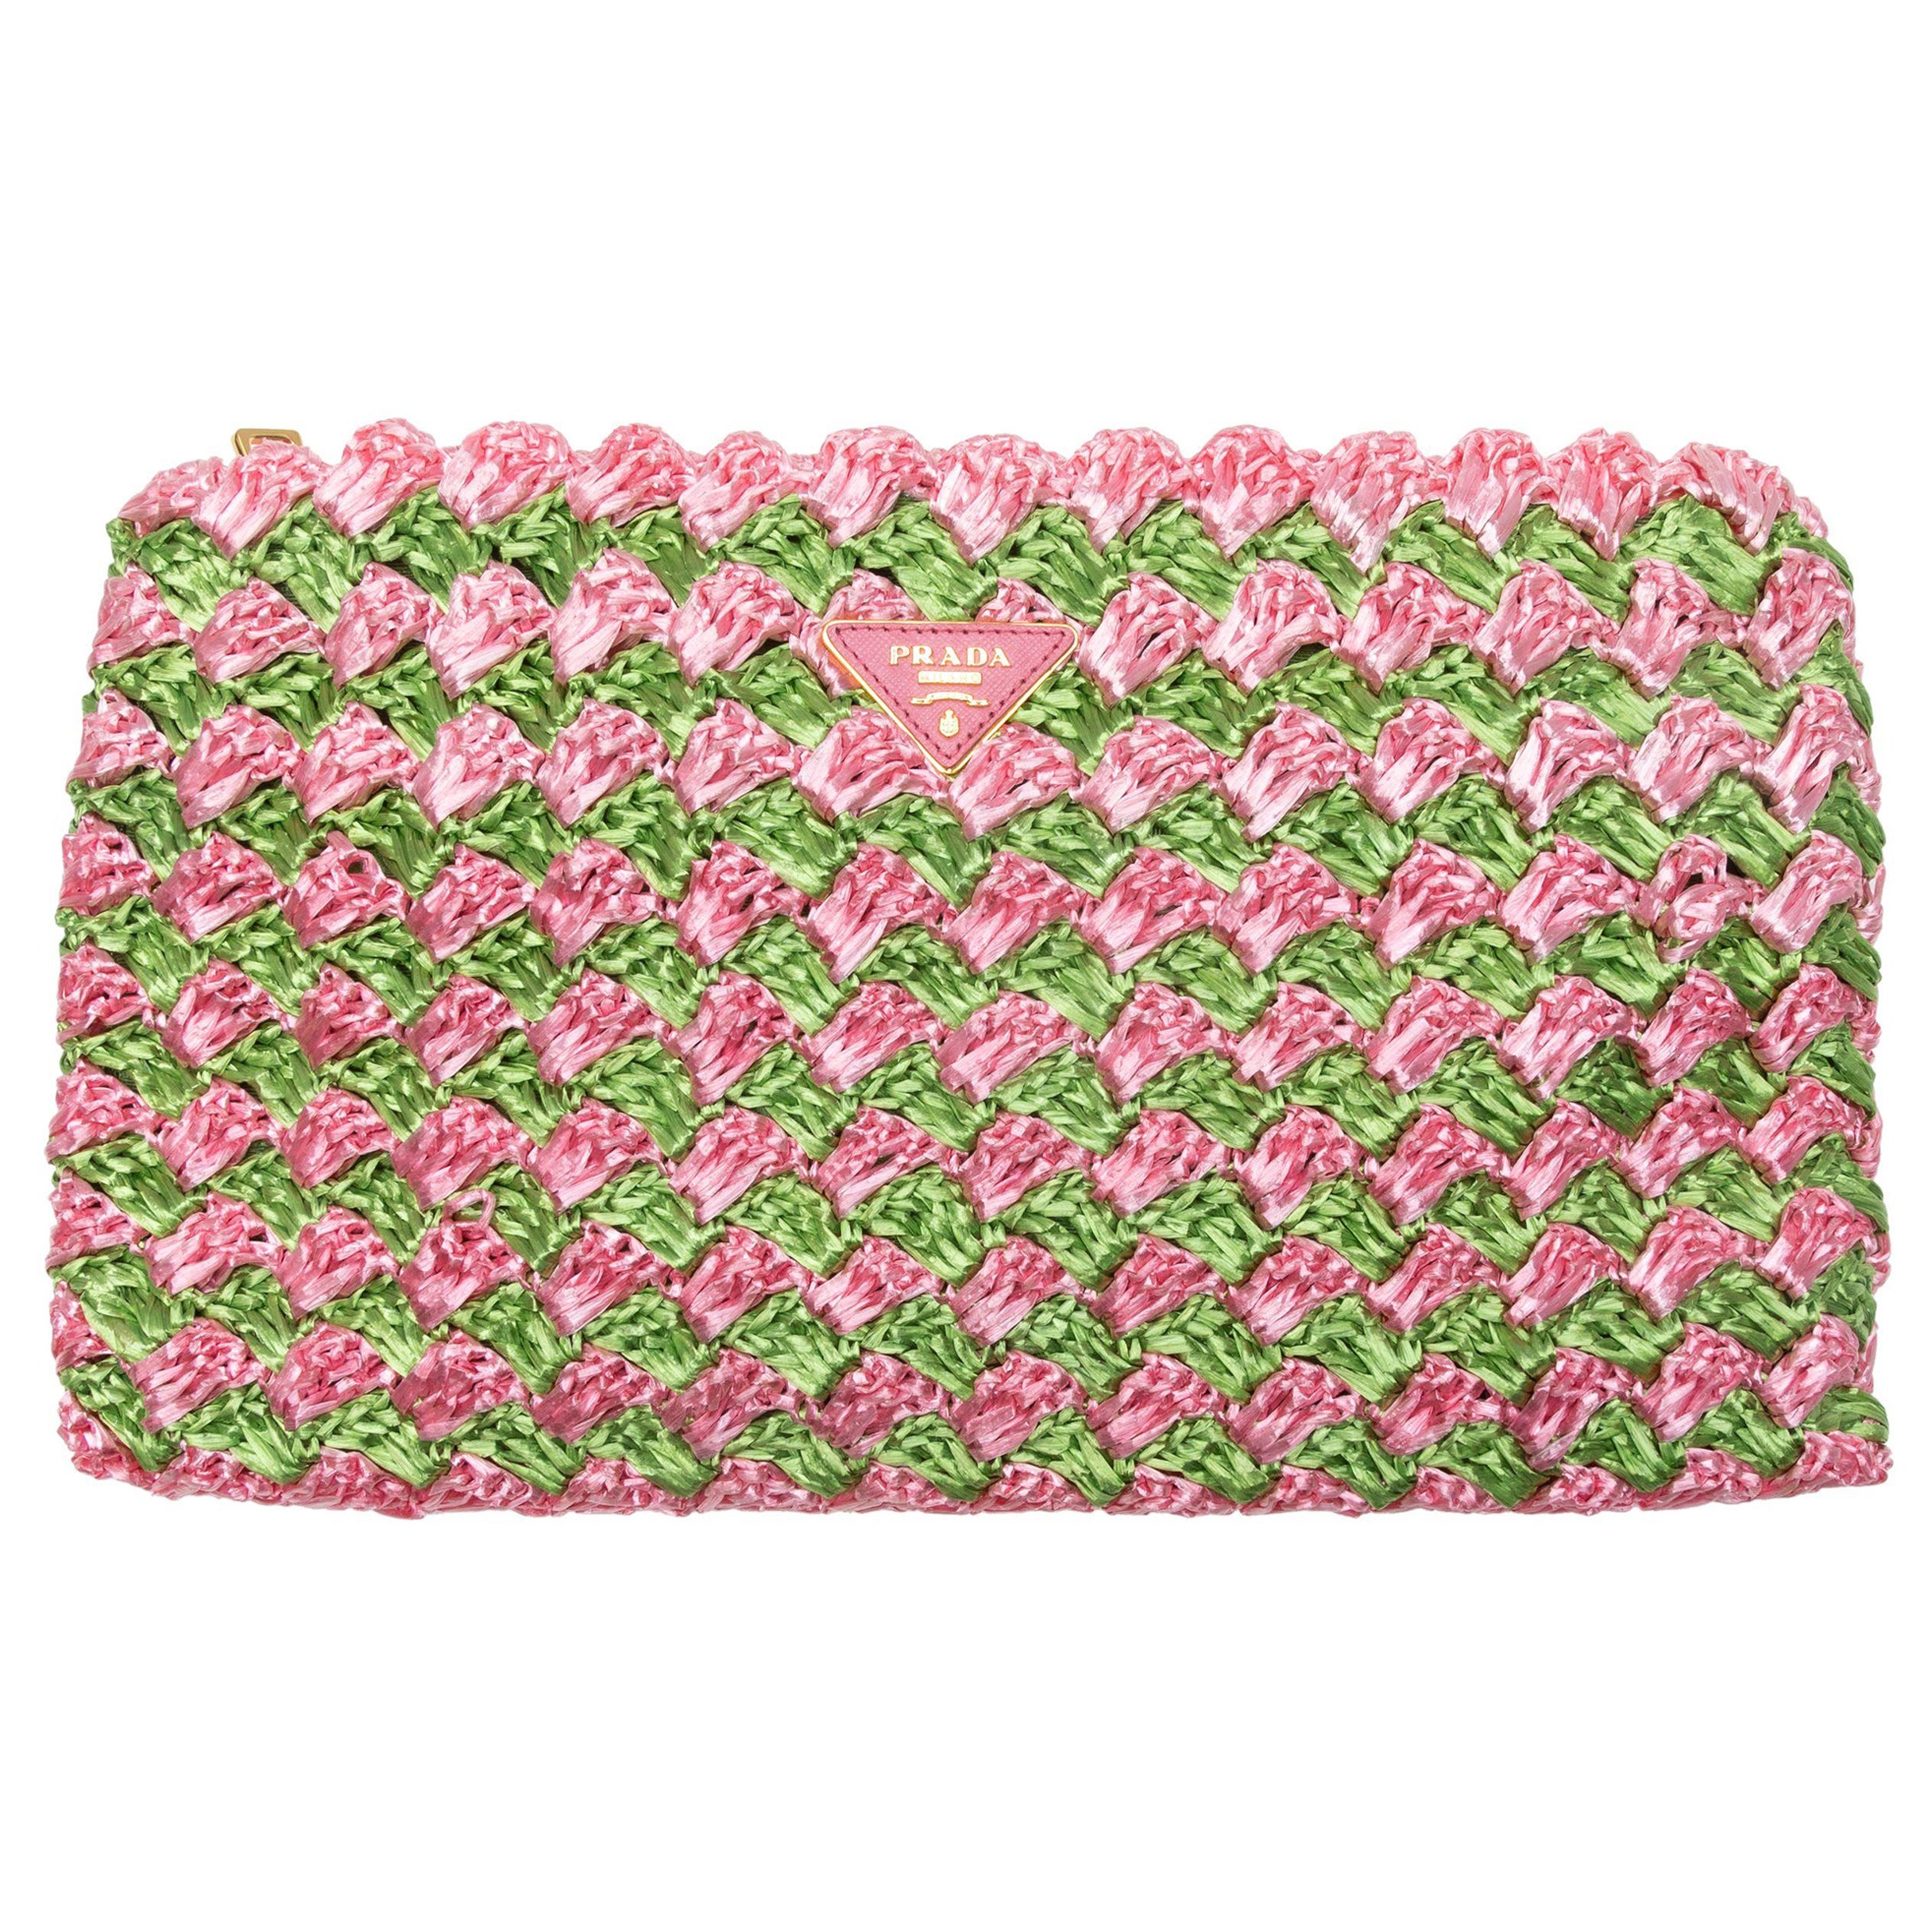 Prada Pink & Green Raffia Woven Clutch